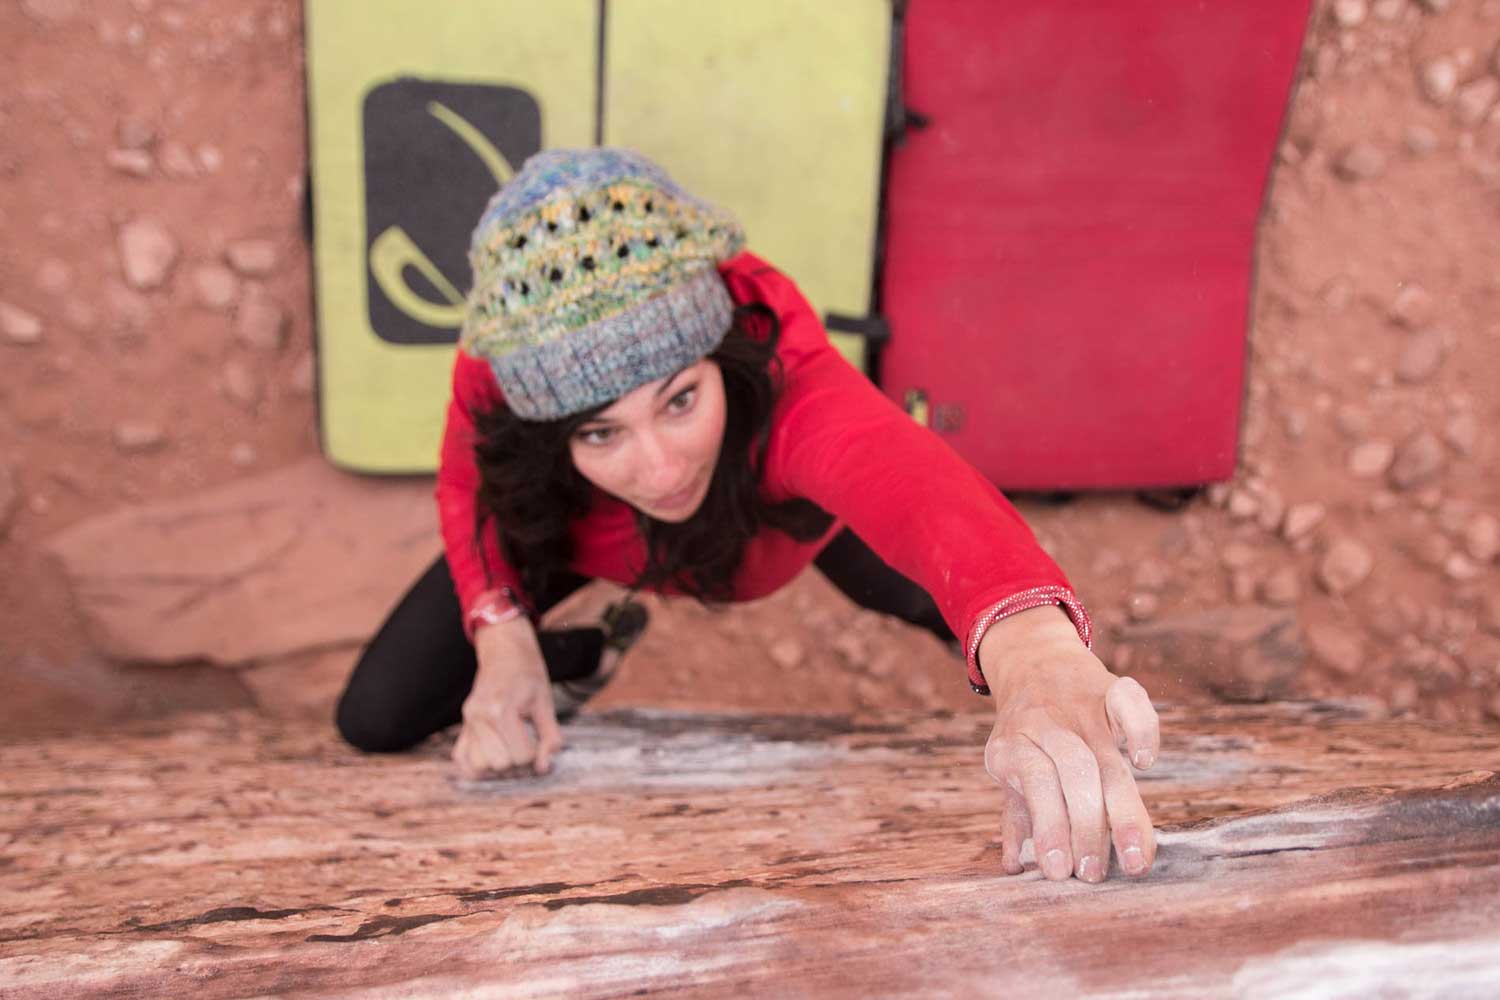 Gabi with her red Organic Climbing crash pad made with CORDURA brand fabric. Photo by Just Go Climb.